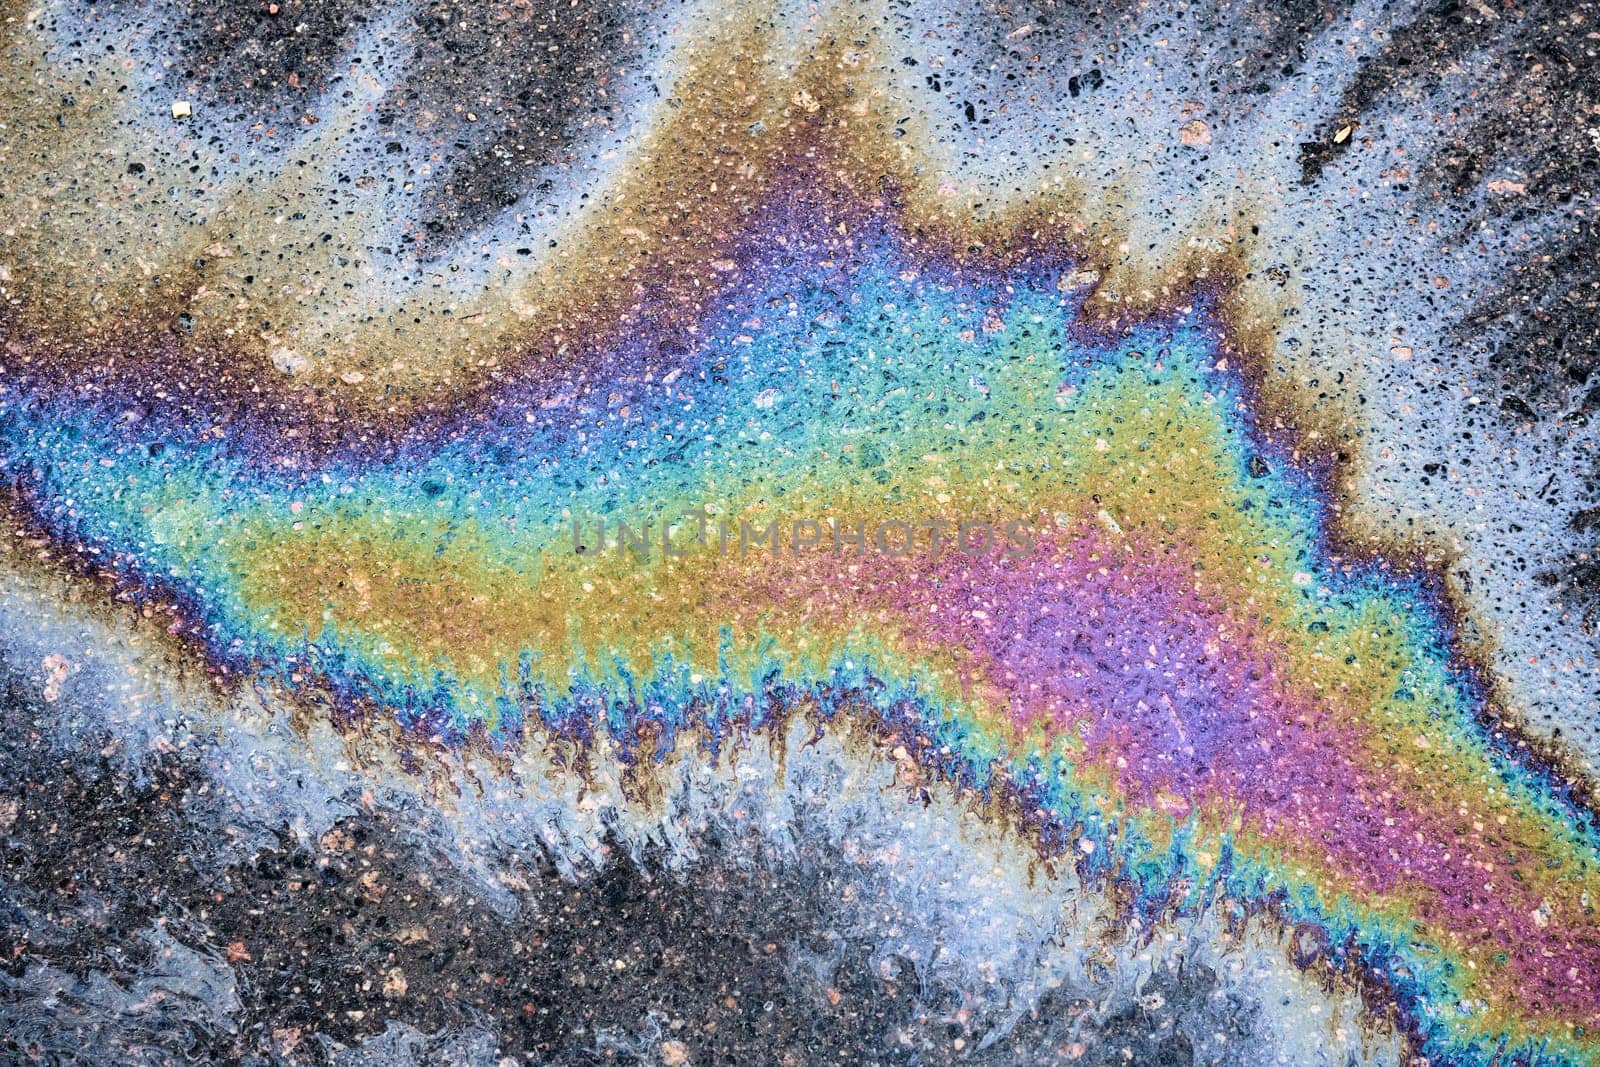 Background texture of oil spill on dark asphalt, parking lot.